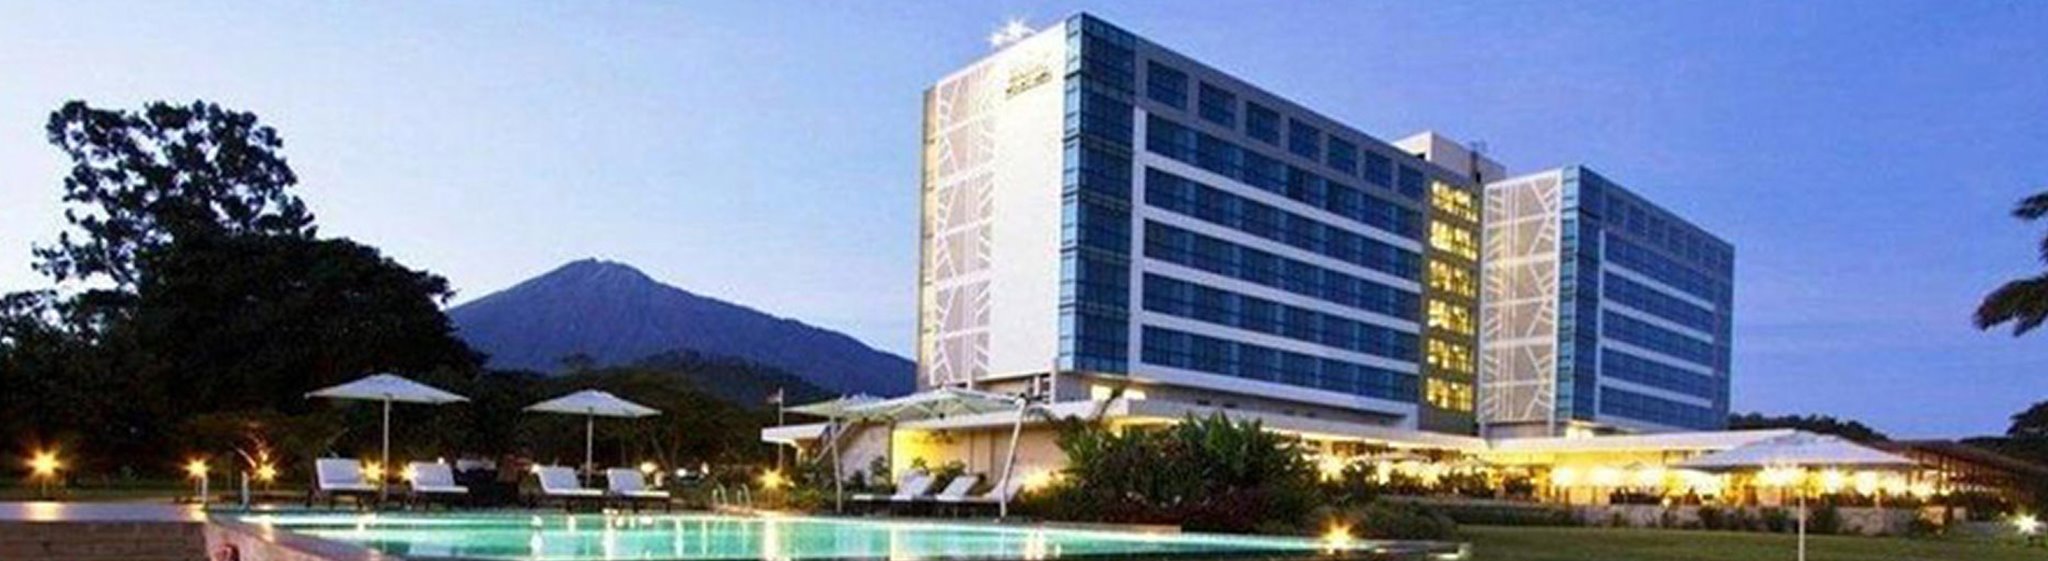 Mount Meru Hotel - Safanta Tours & Travel Company Limited